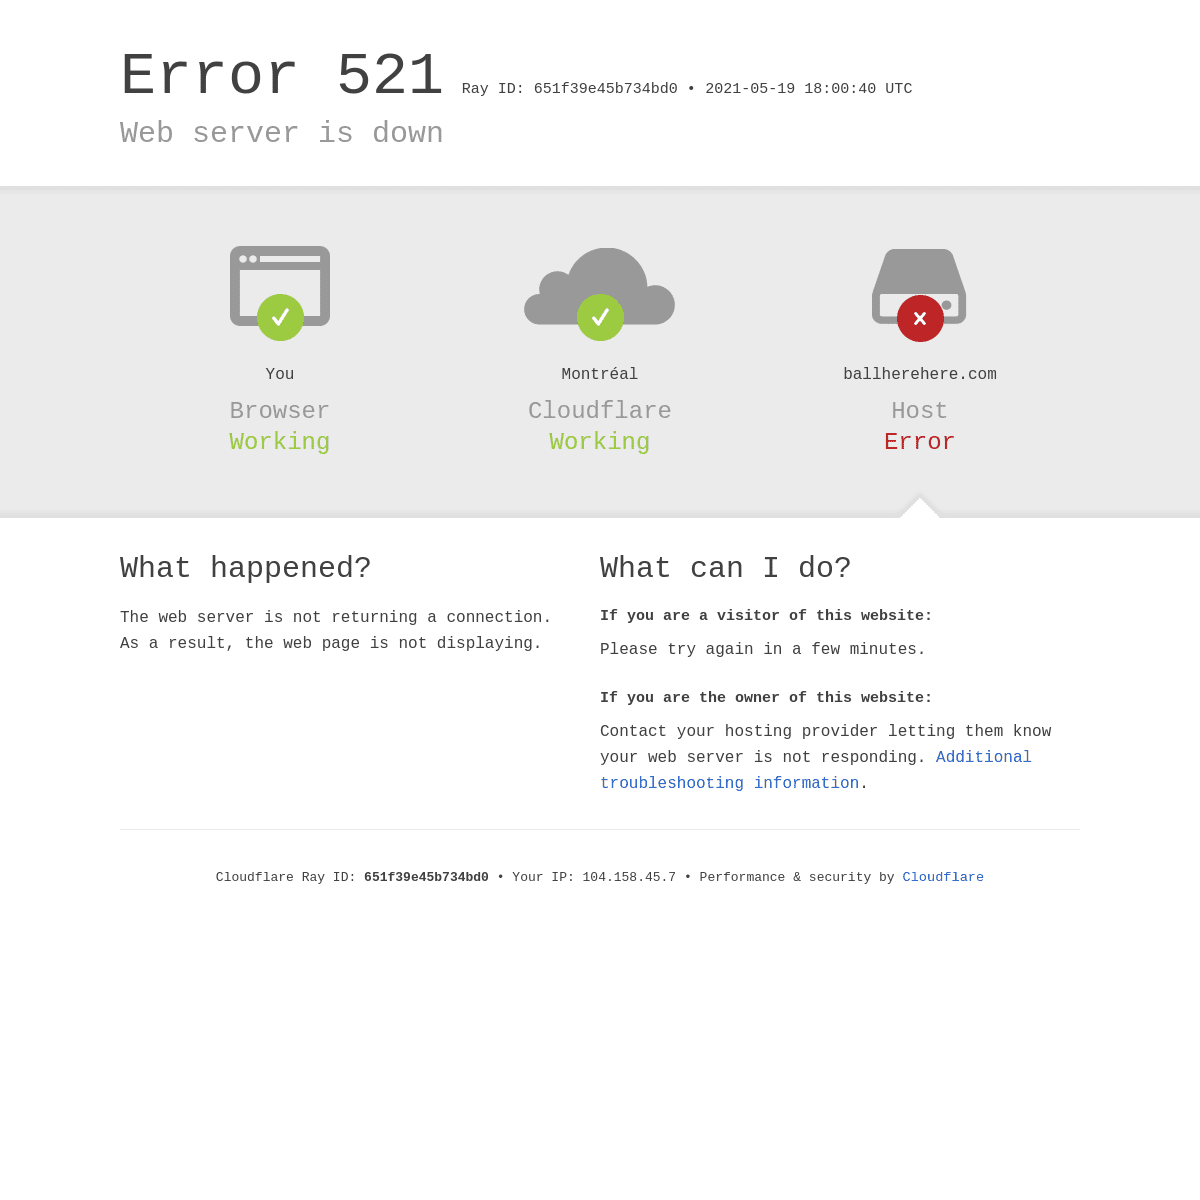 ballherehere.com - 521- Web server is down